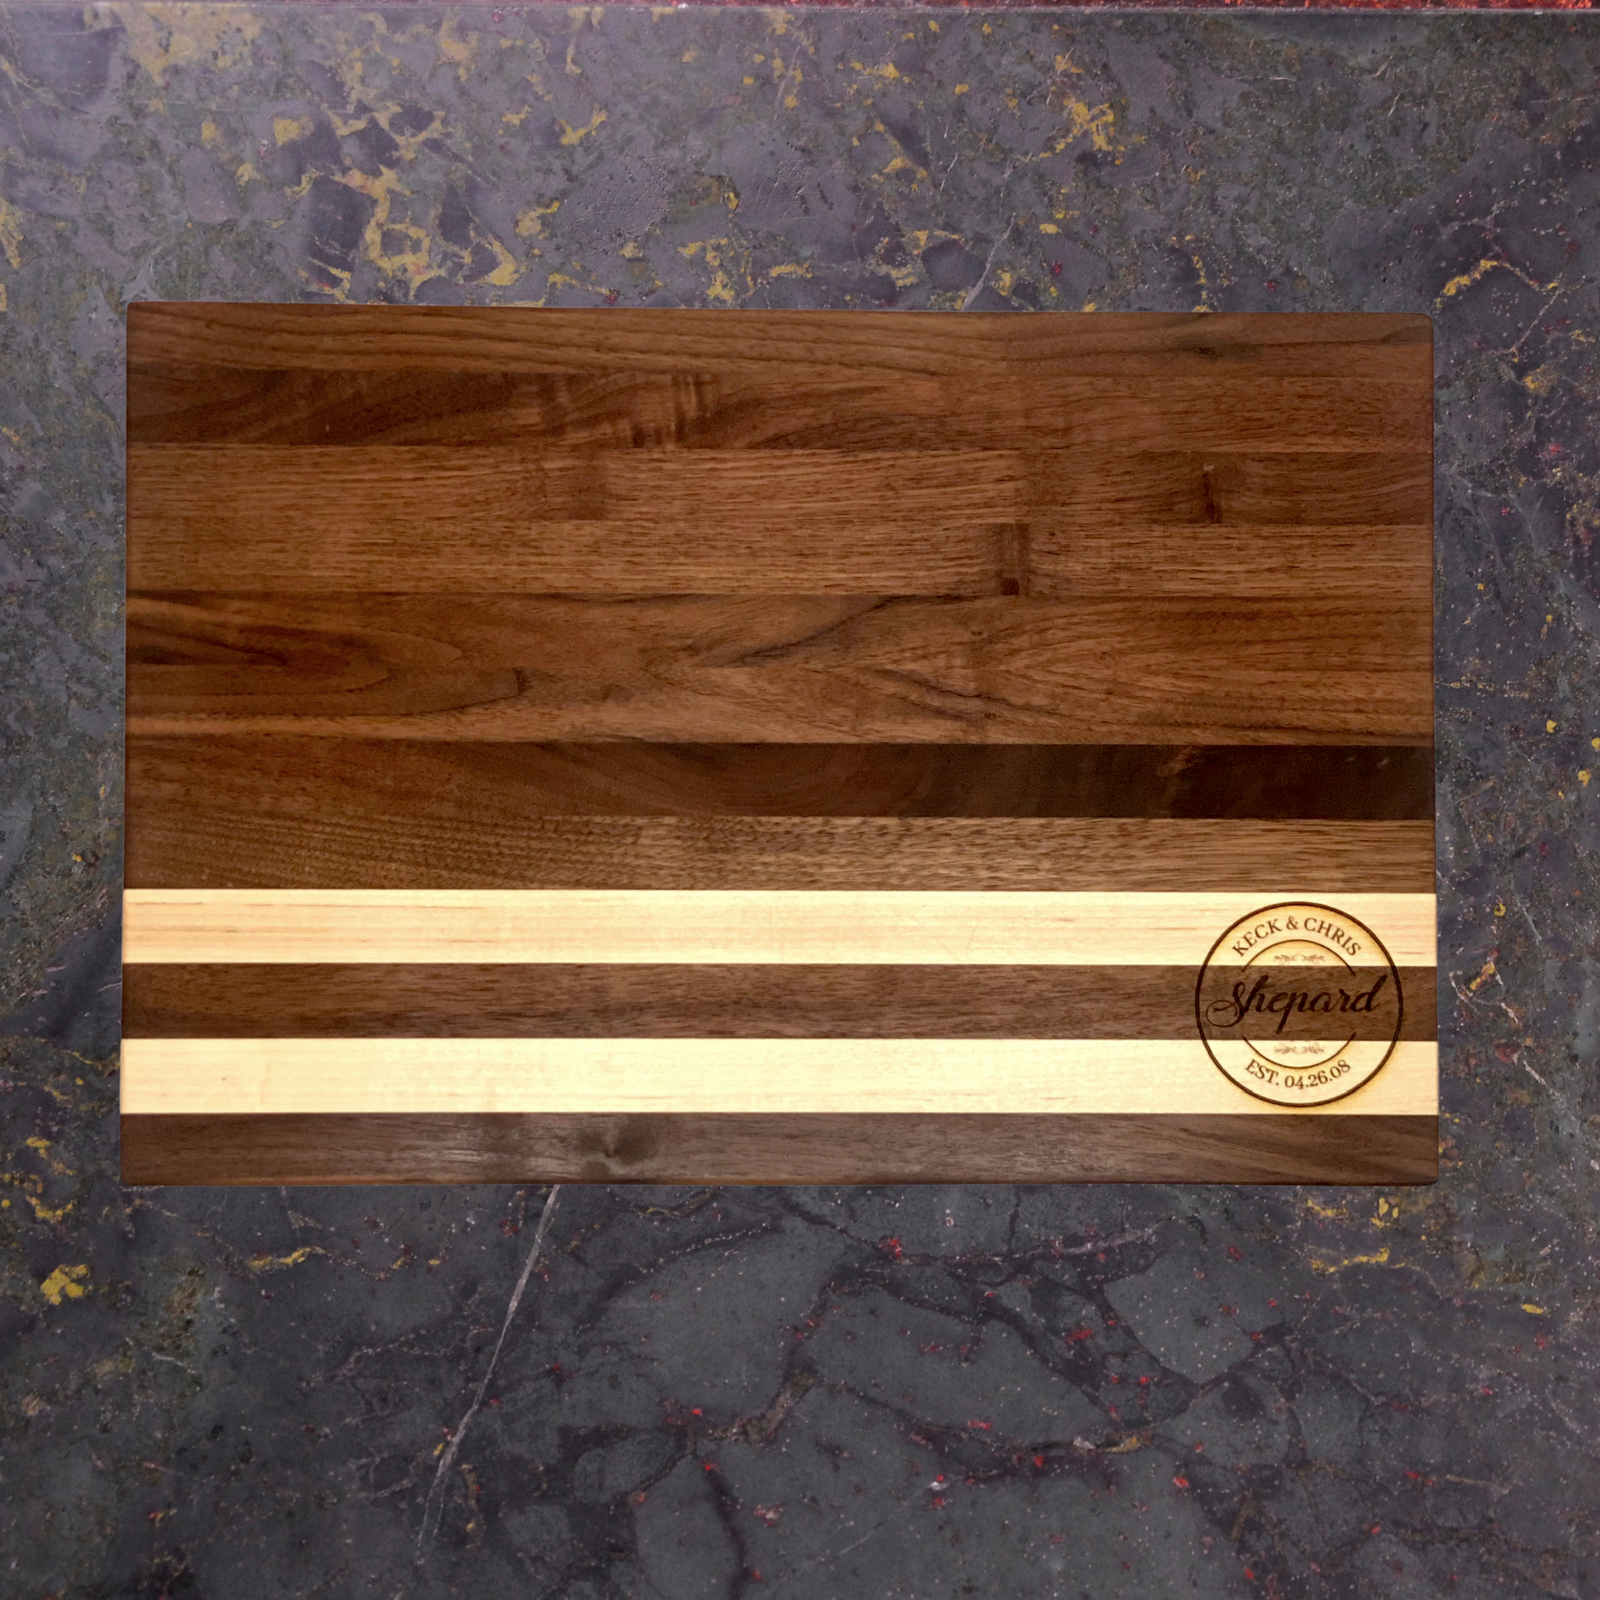 Handmade Solid Walnut and Maple Wood Cutting Board